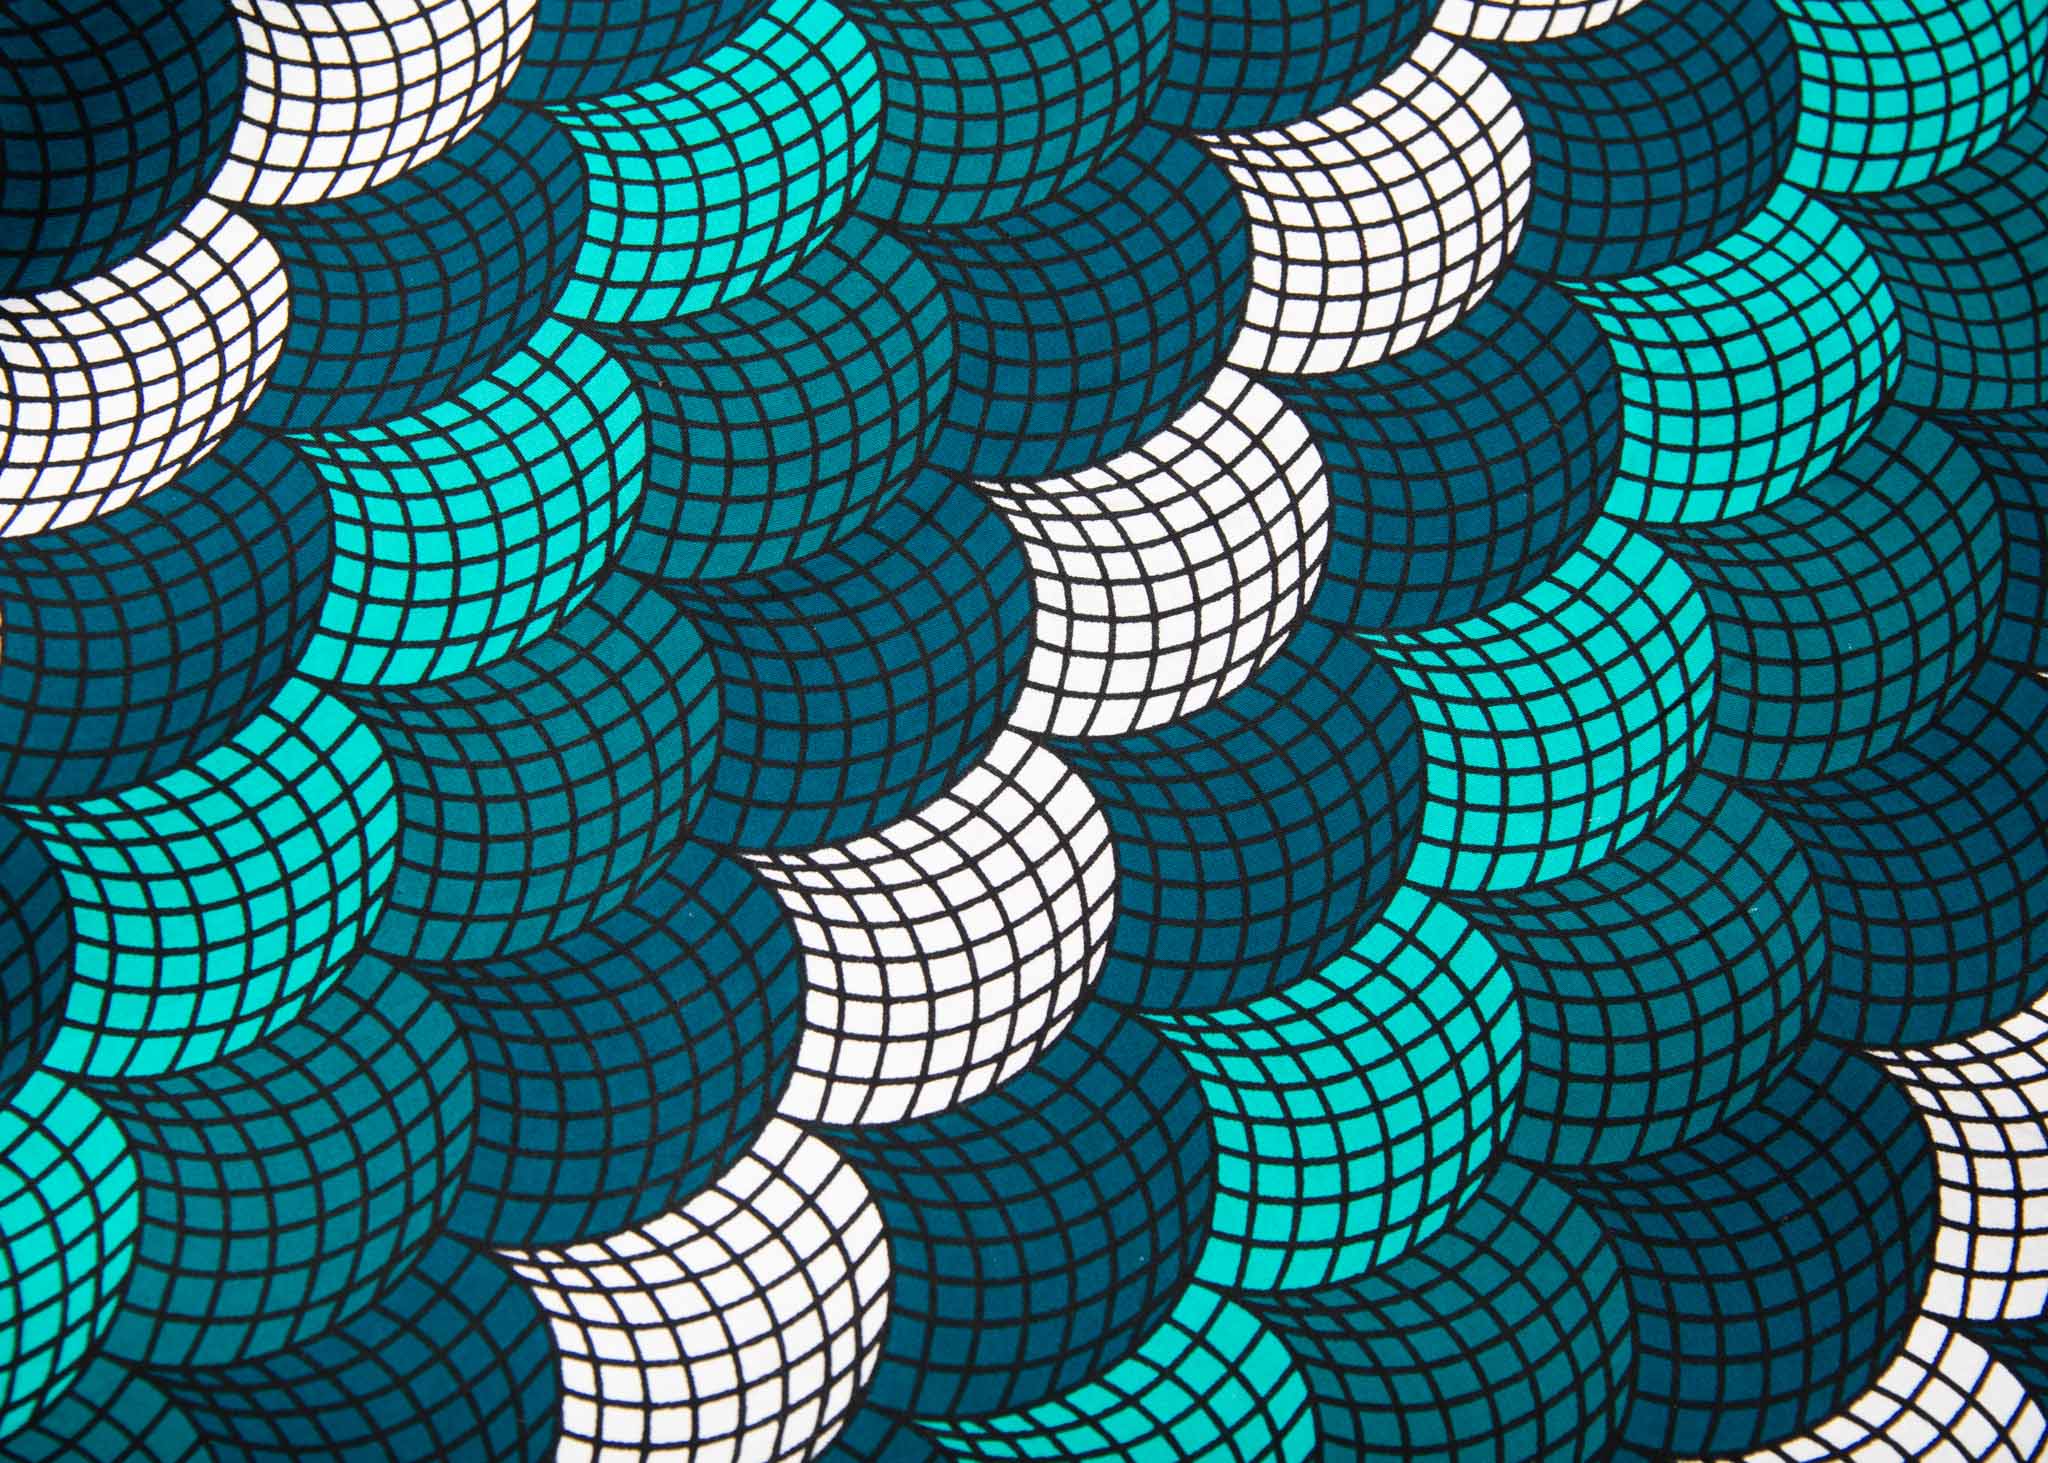 Display of circular grid print dress, with hues of blue, fabric.